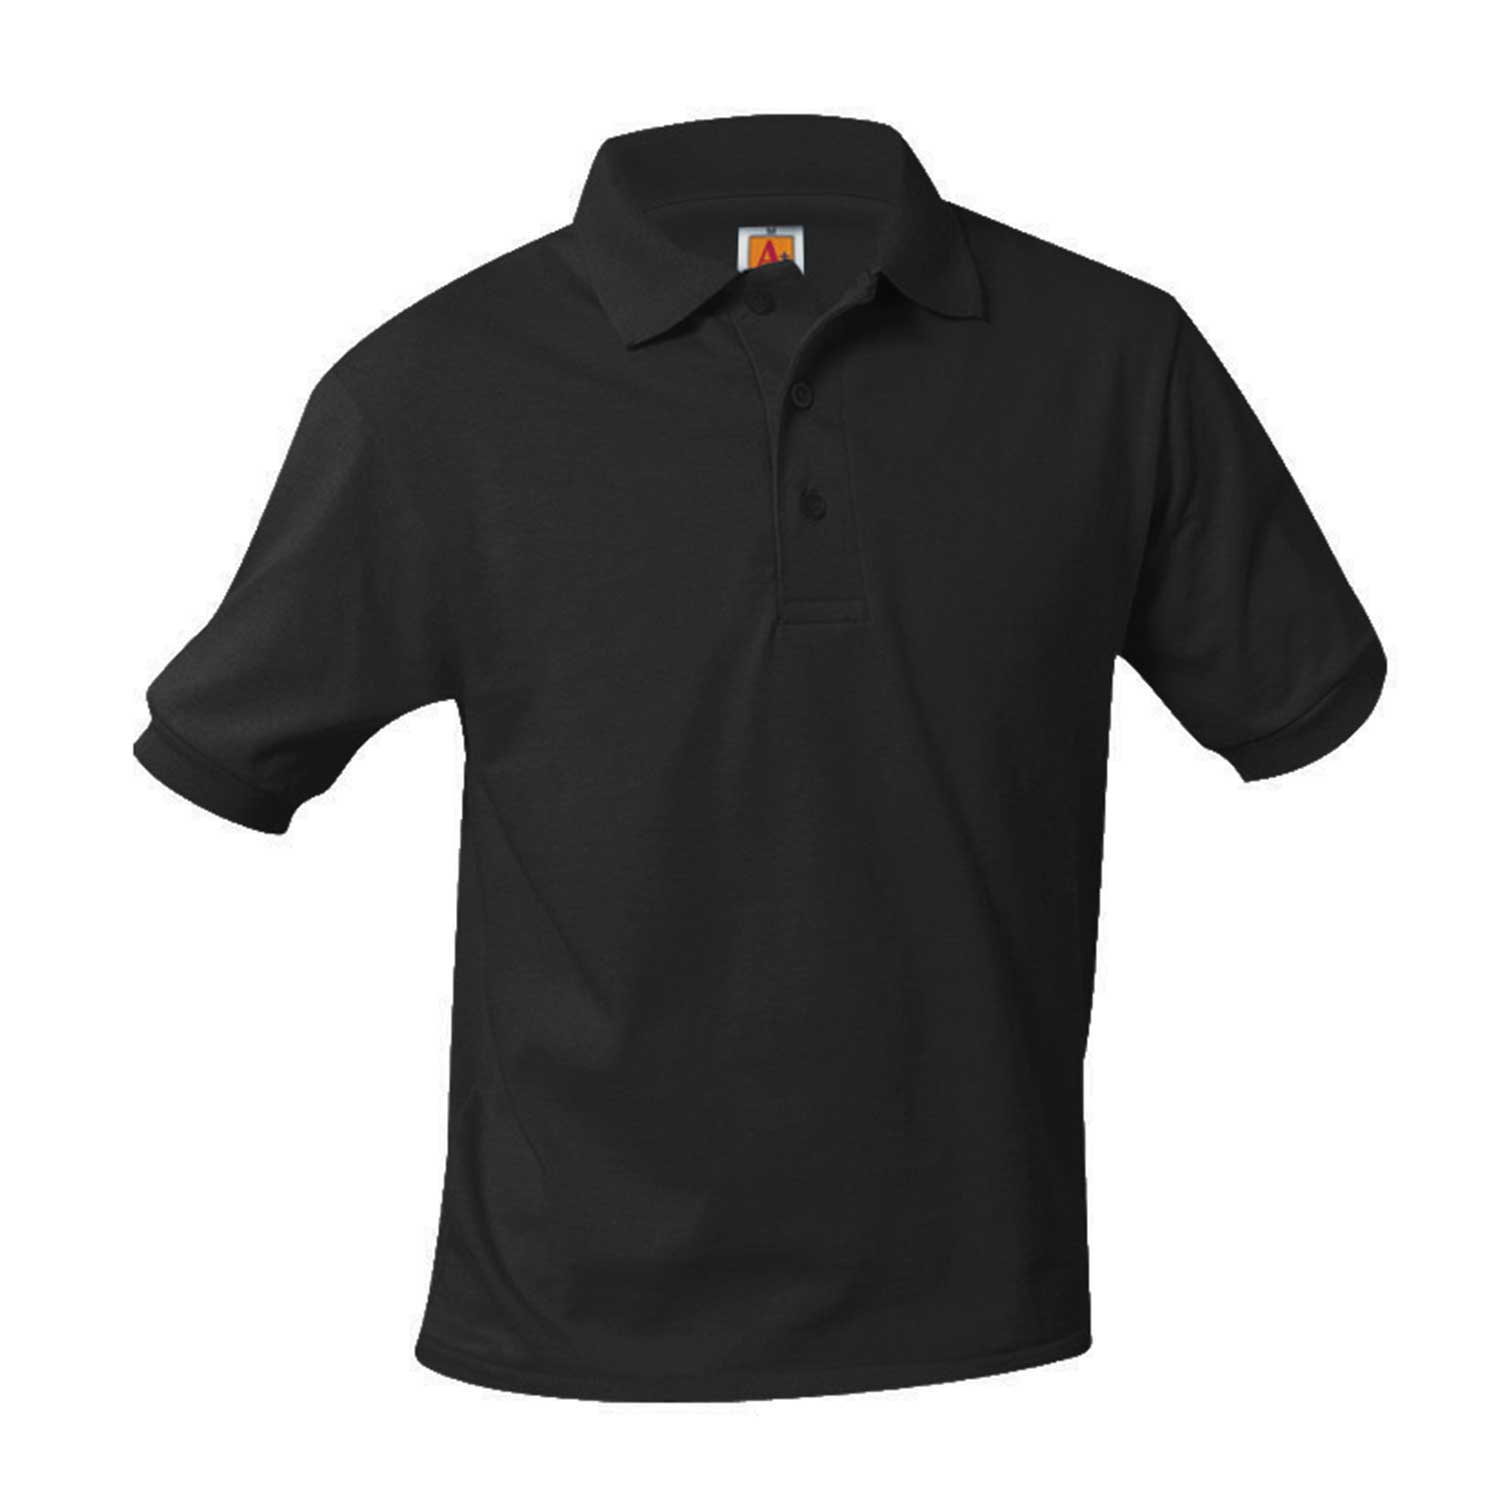 Unisex Interlock Knit Polo Shirt - Short Sleeve - Black